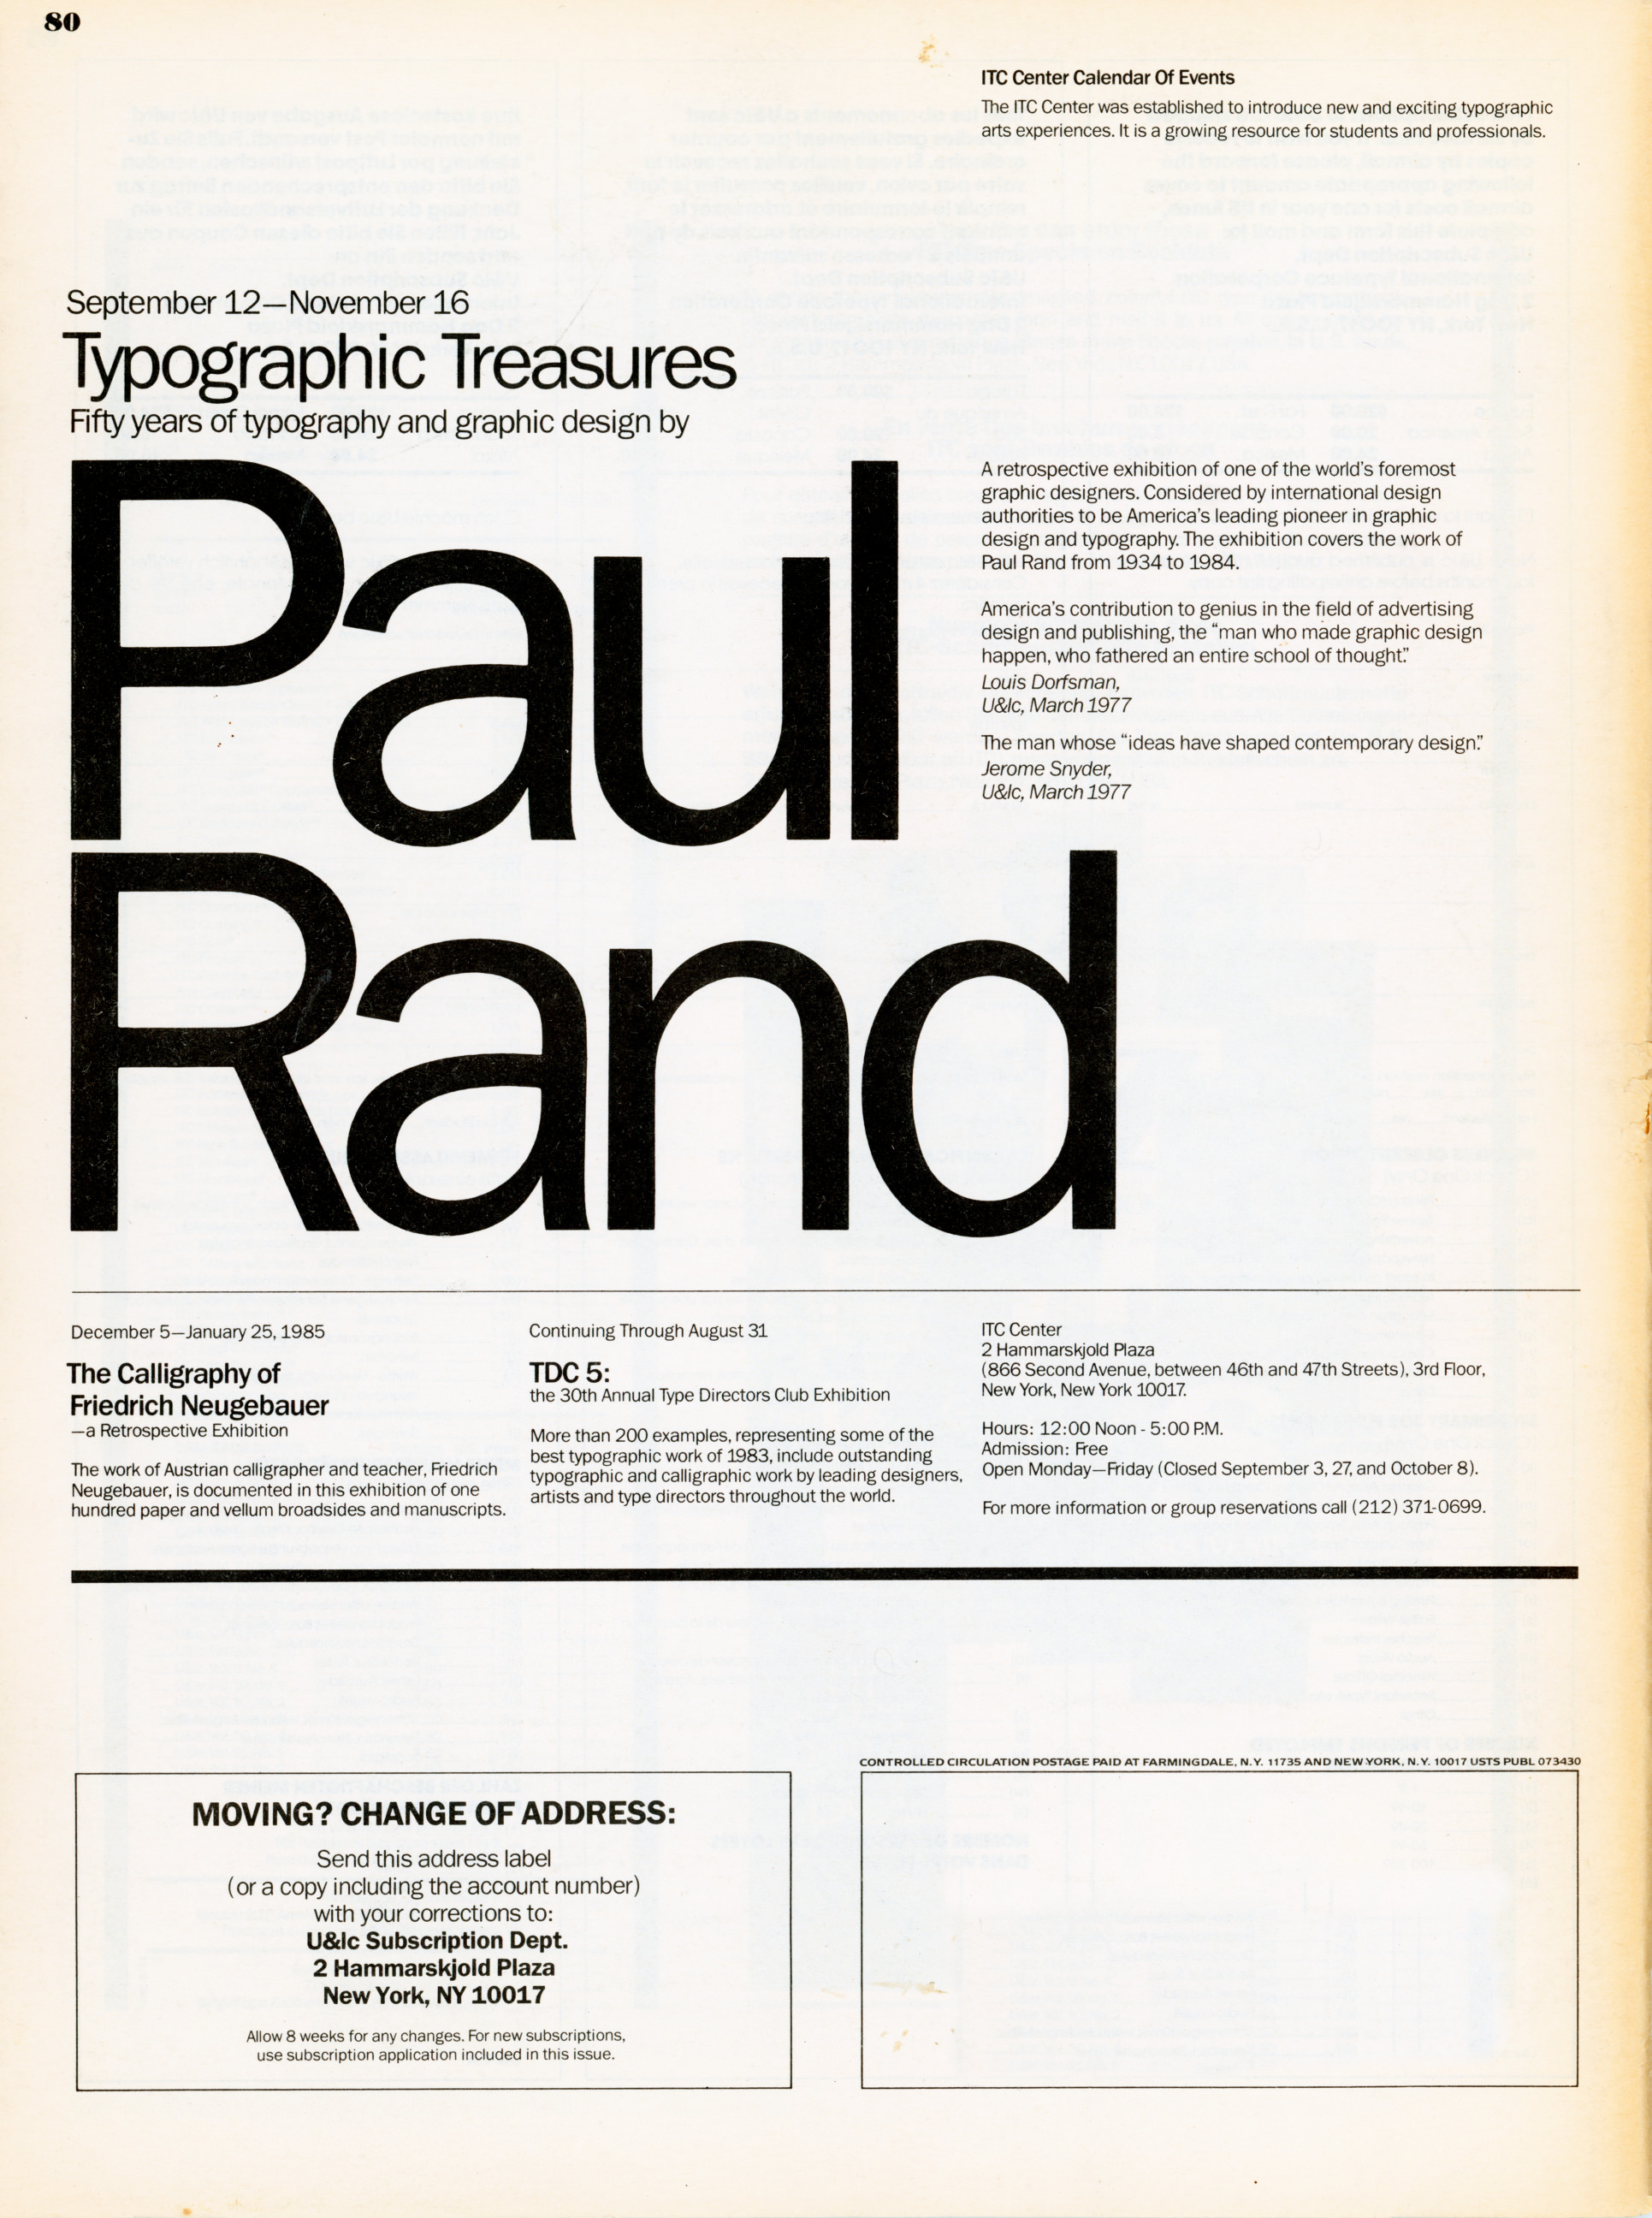 ITC Center Typographic Treasures | Paul Rand: Modernist Master